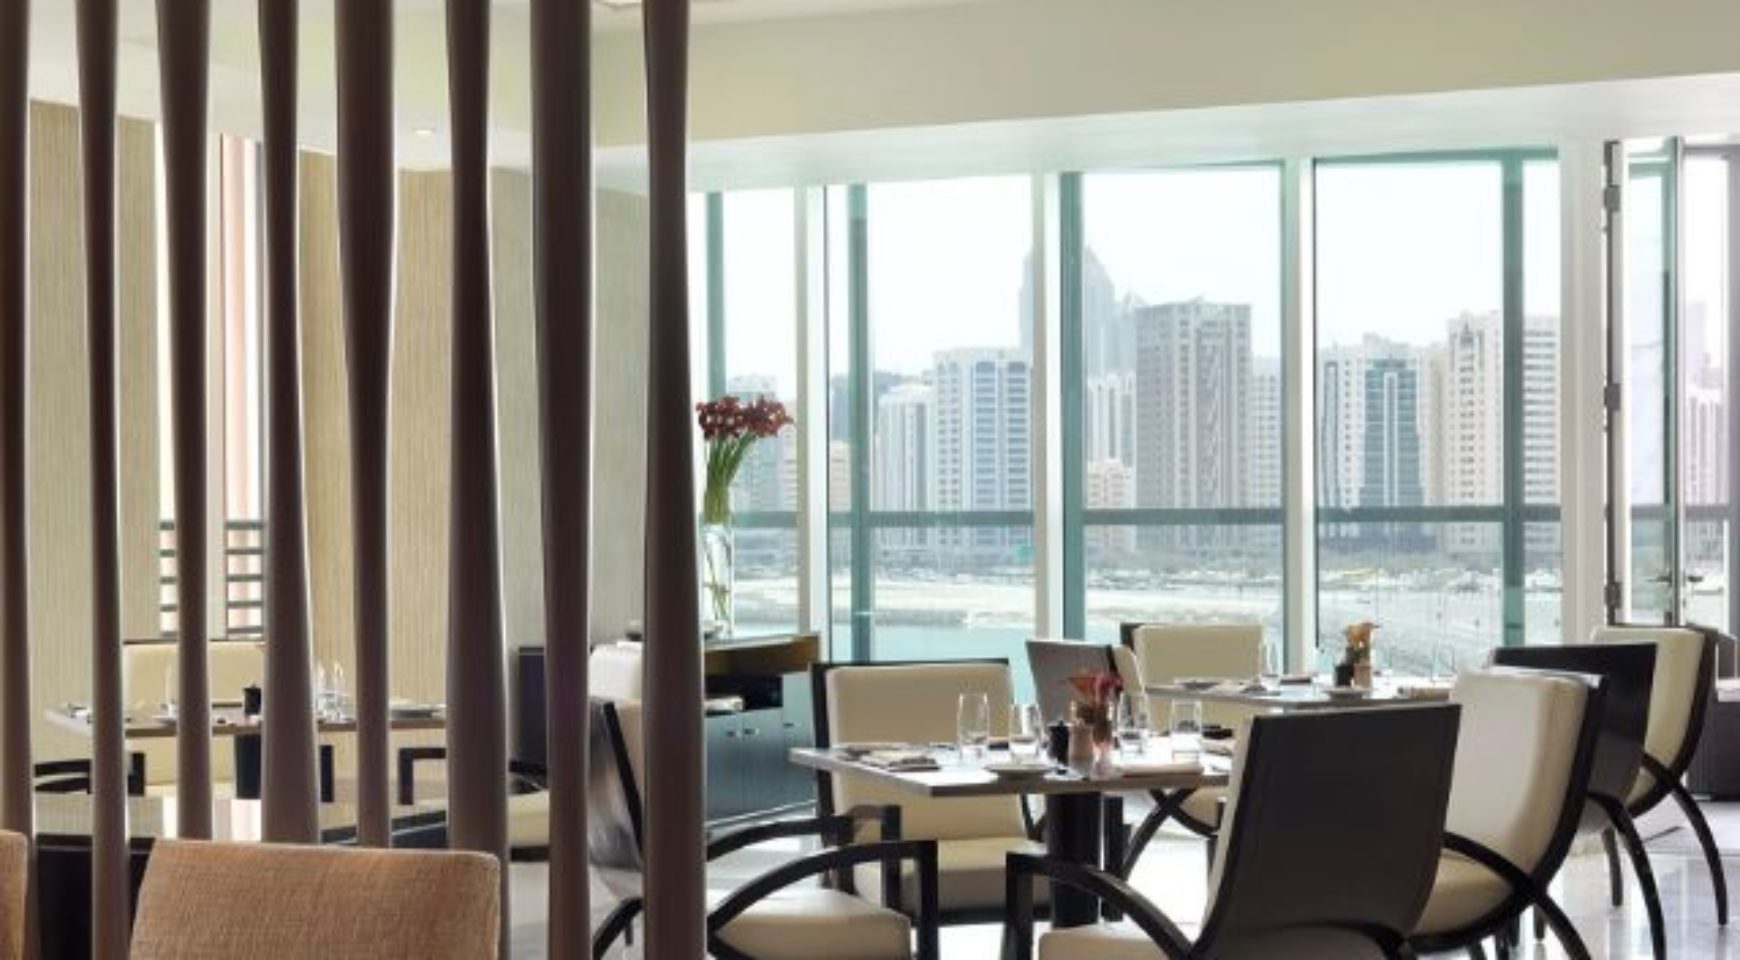 Crust Four Seasons Abu Dhabi Abu Dhabi Restaurants Guide